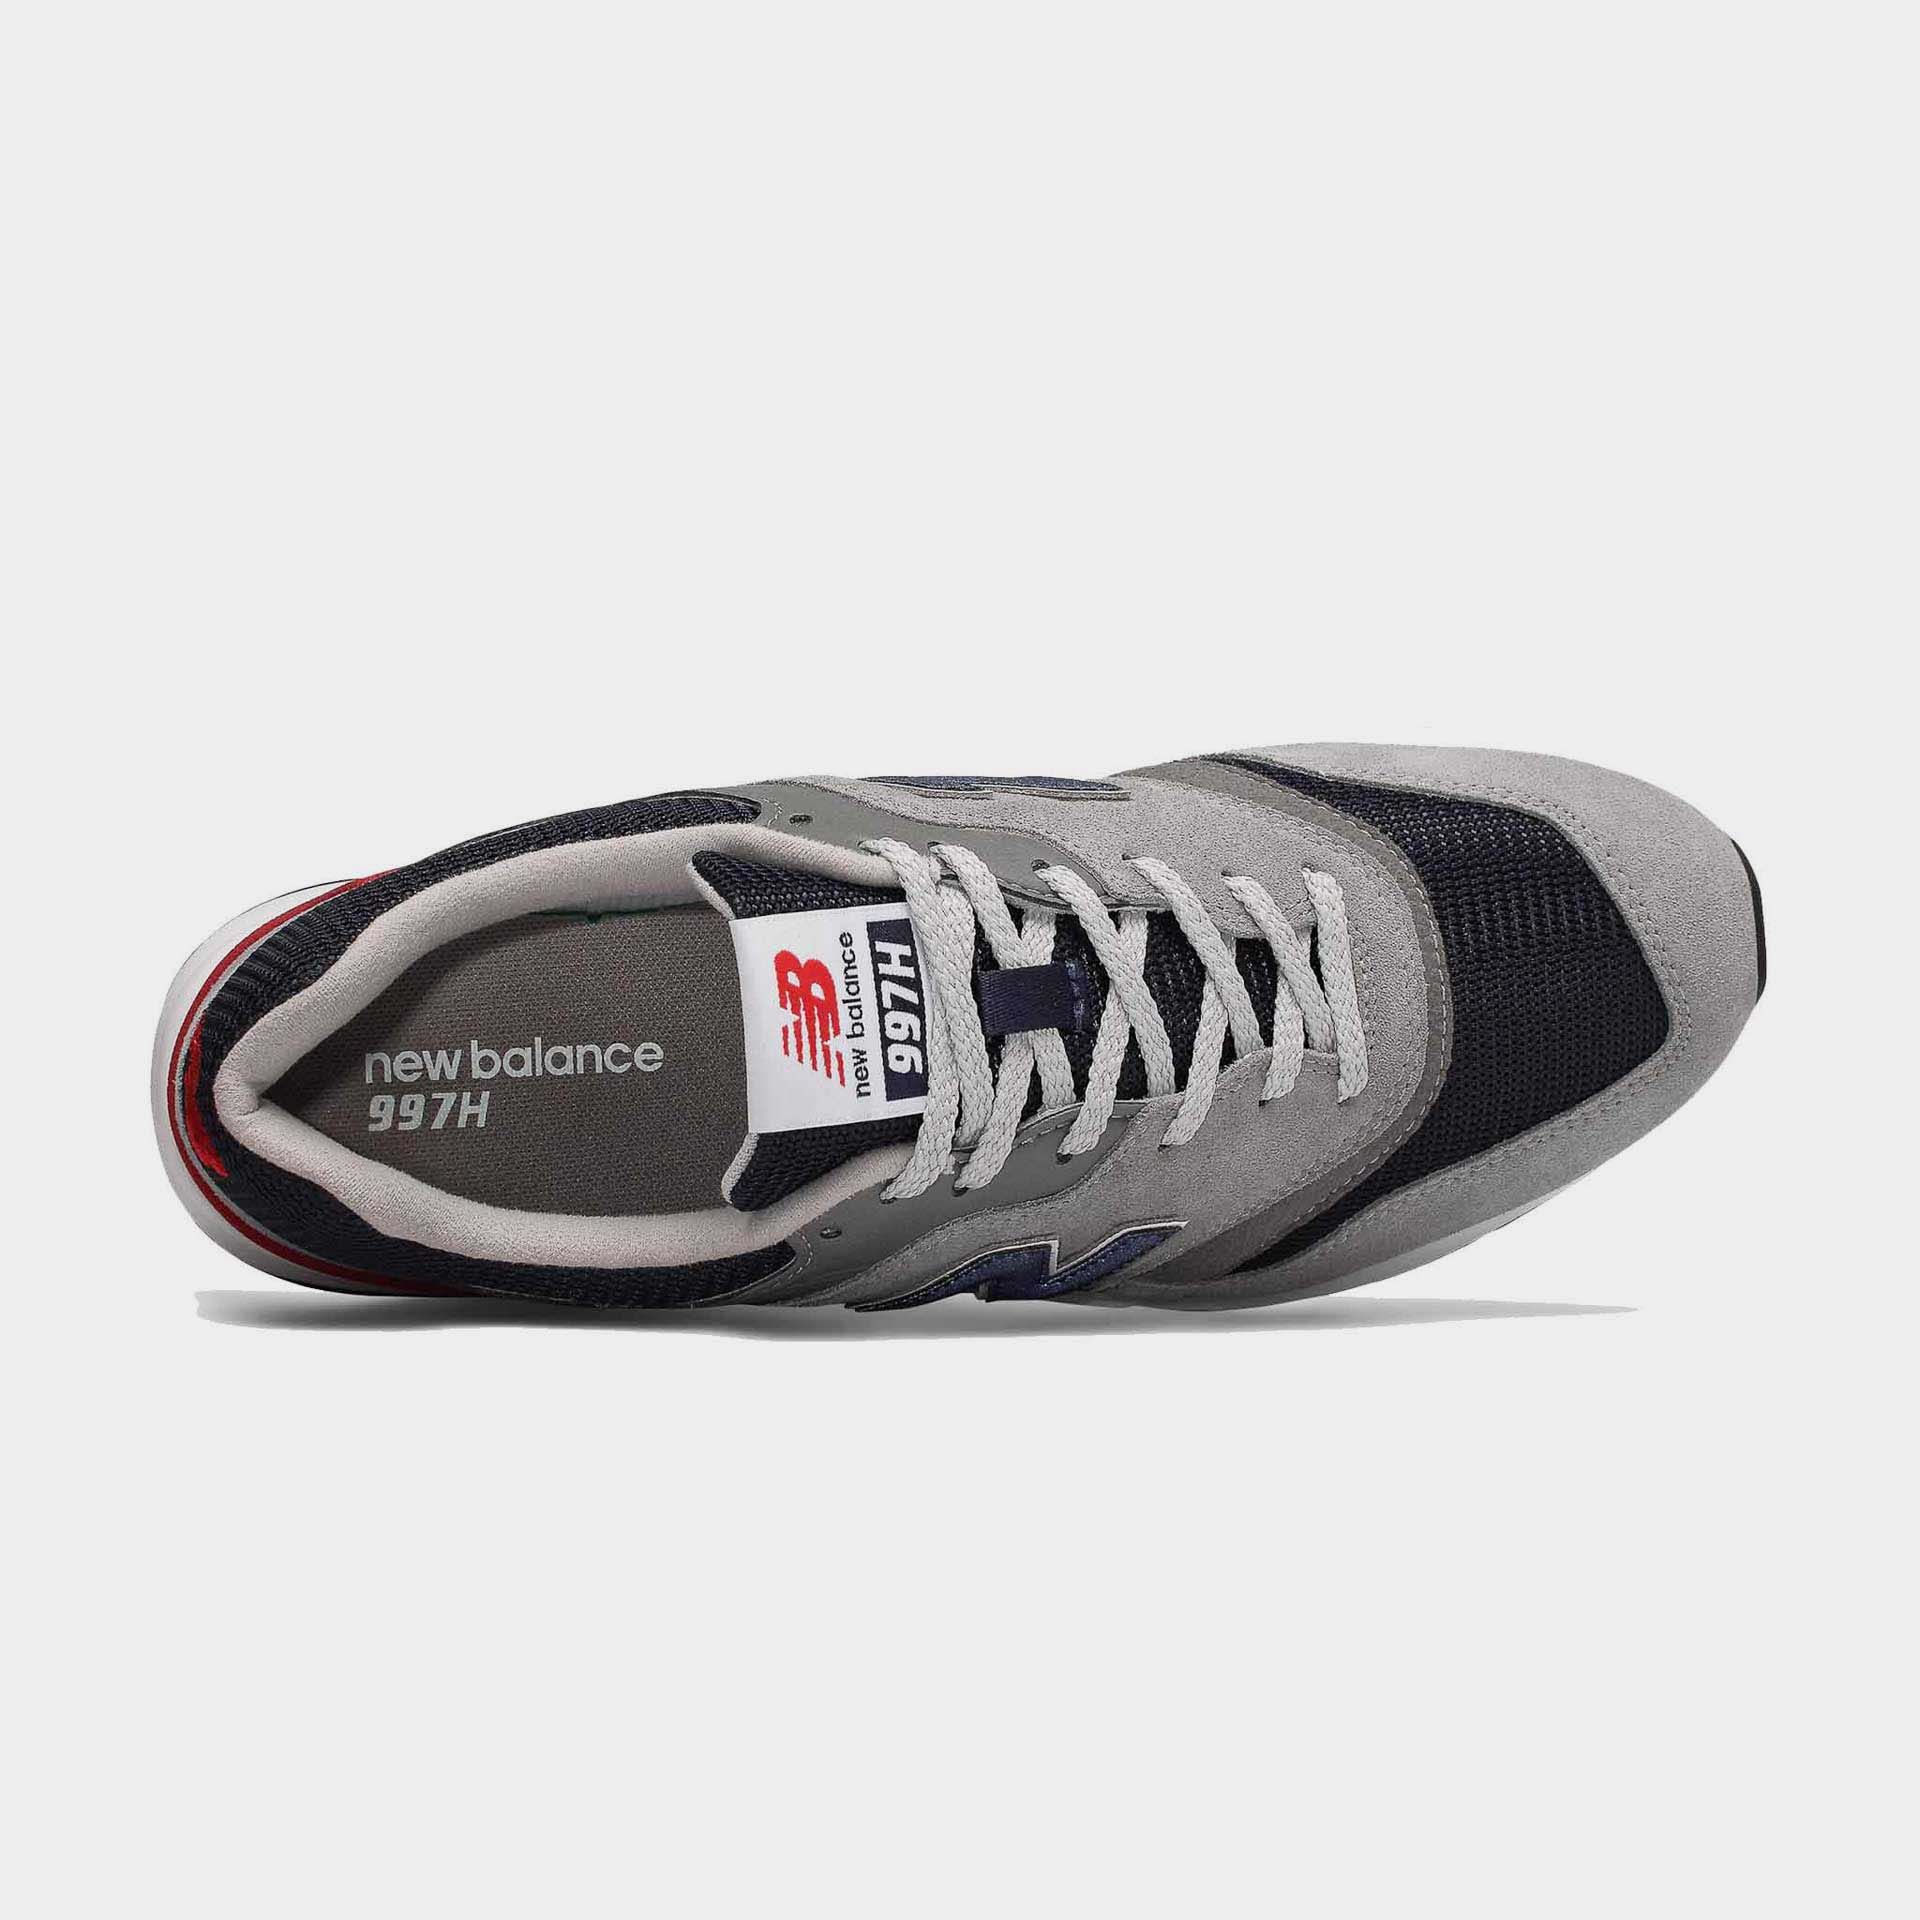 New Balance CM997 Sneaker Team Away Grey / Pigment